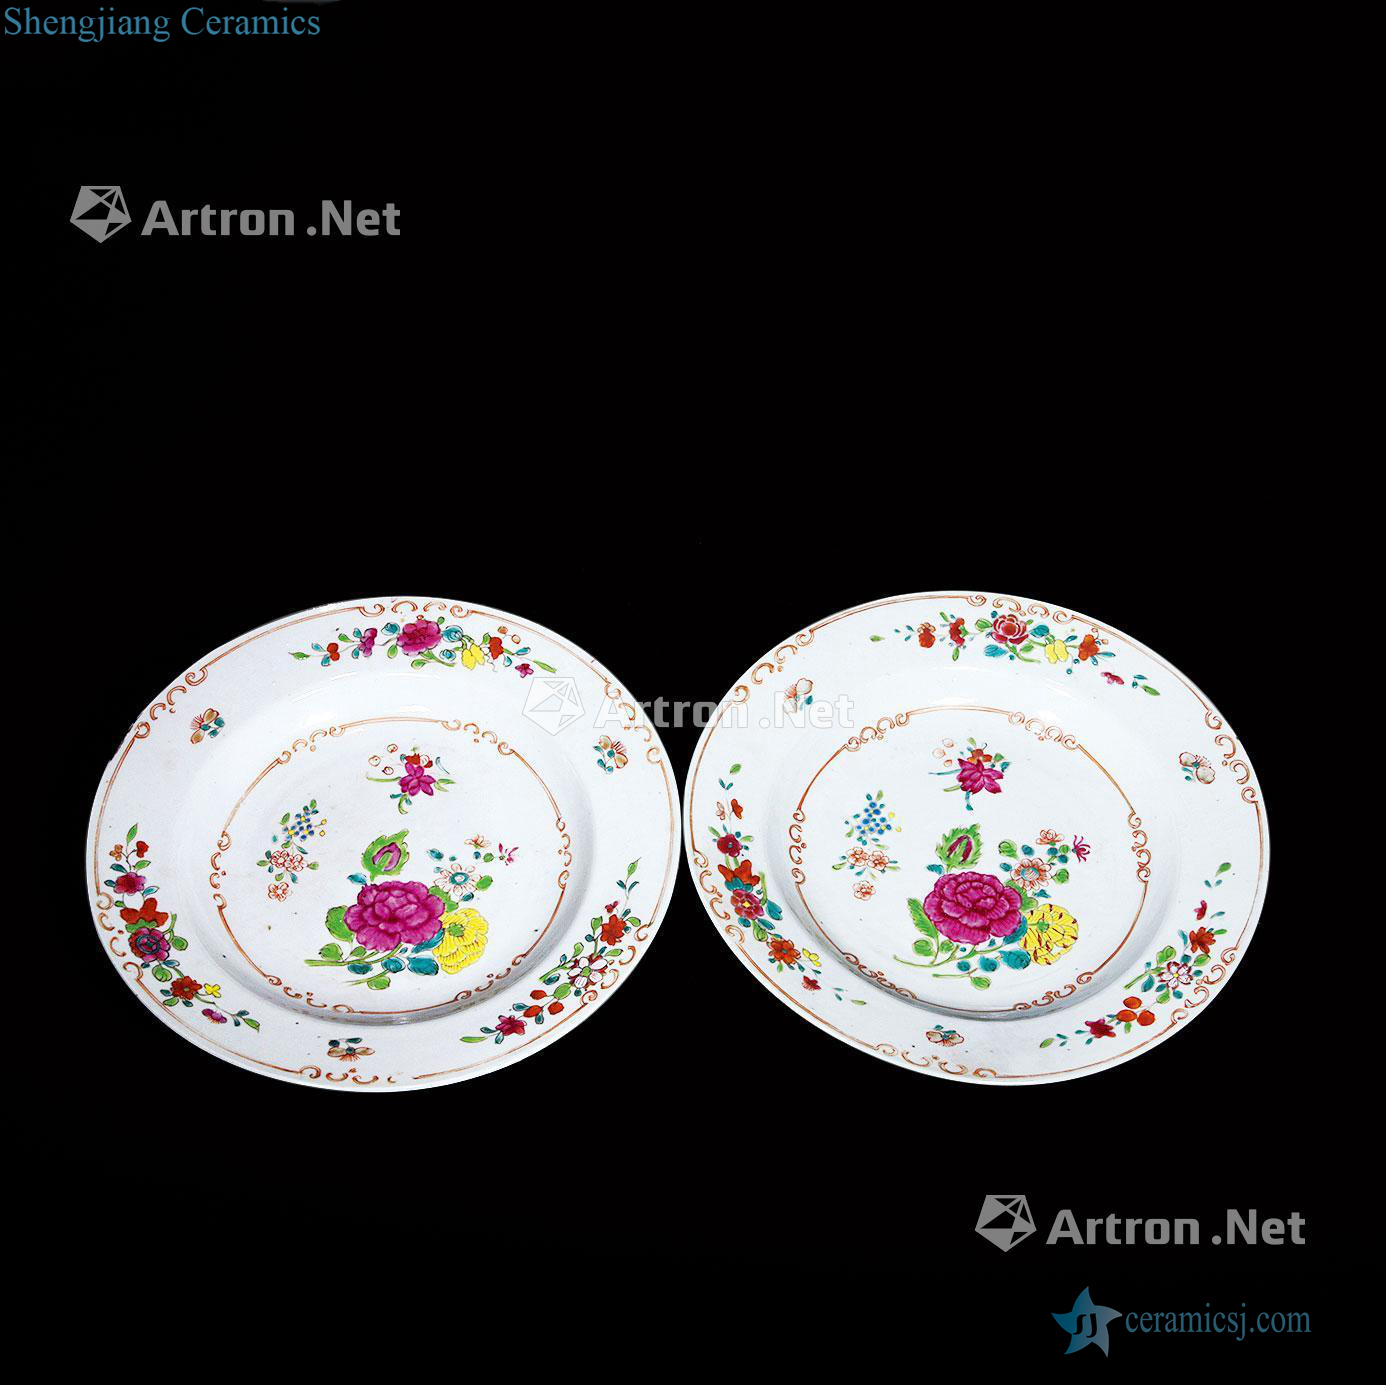 Qing yongzheng pastel peony plate (a)